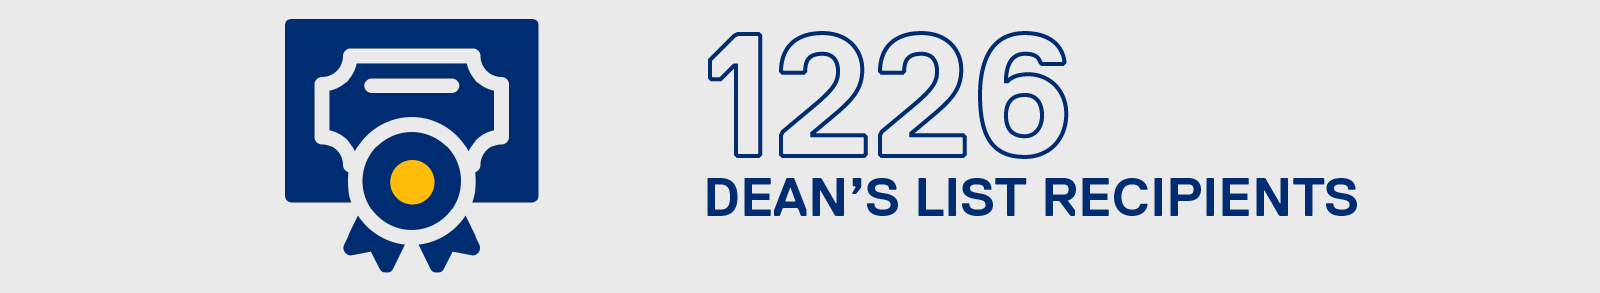 One thousand two hundred twenty six dean's list recipients